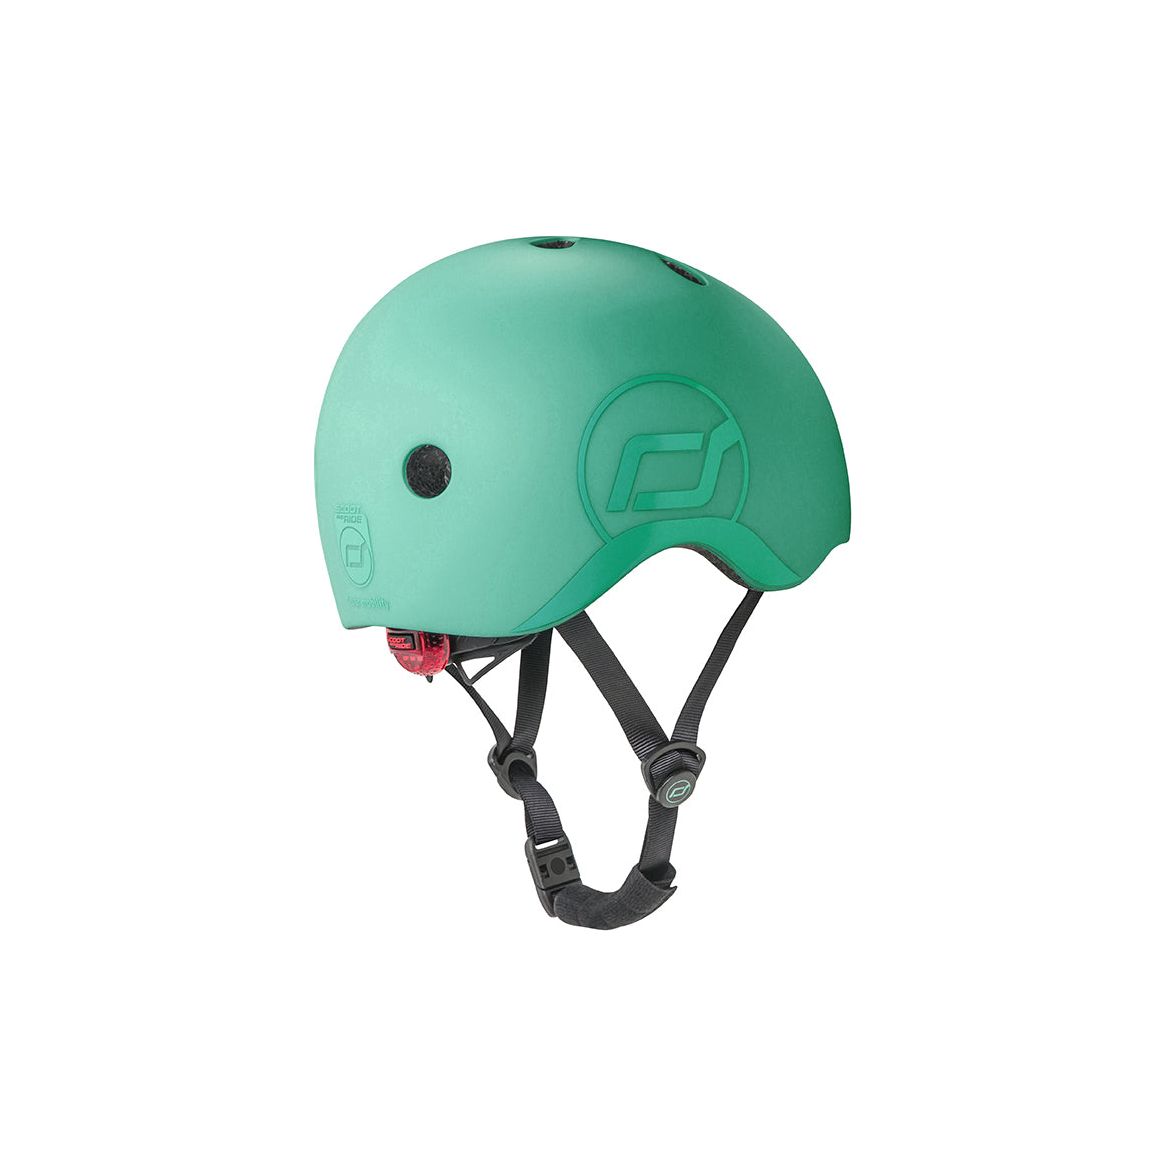 Scoot and Ride Helmet - S-M - 51 - 55cm